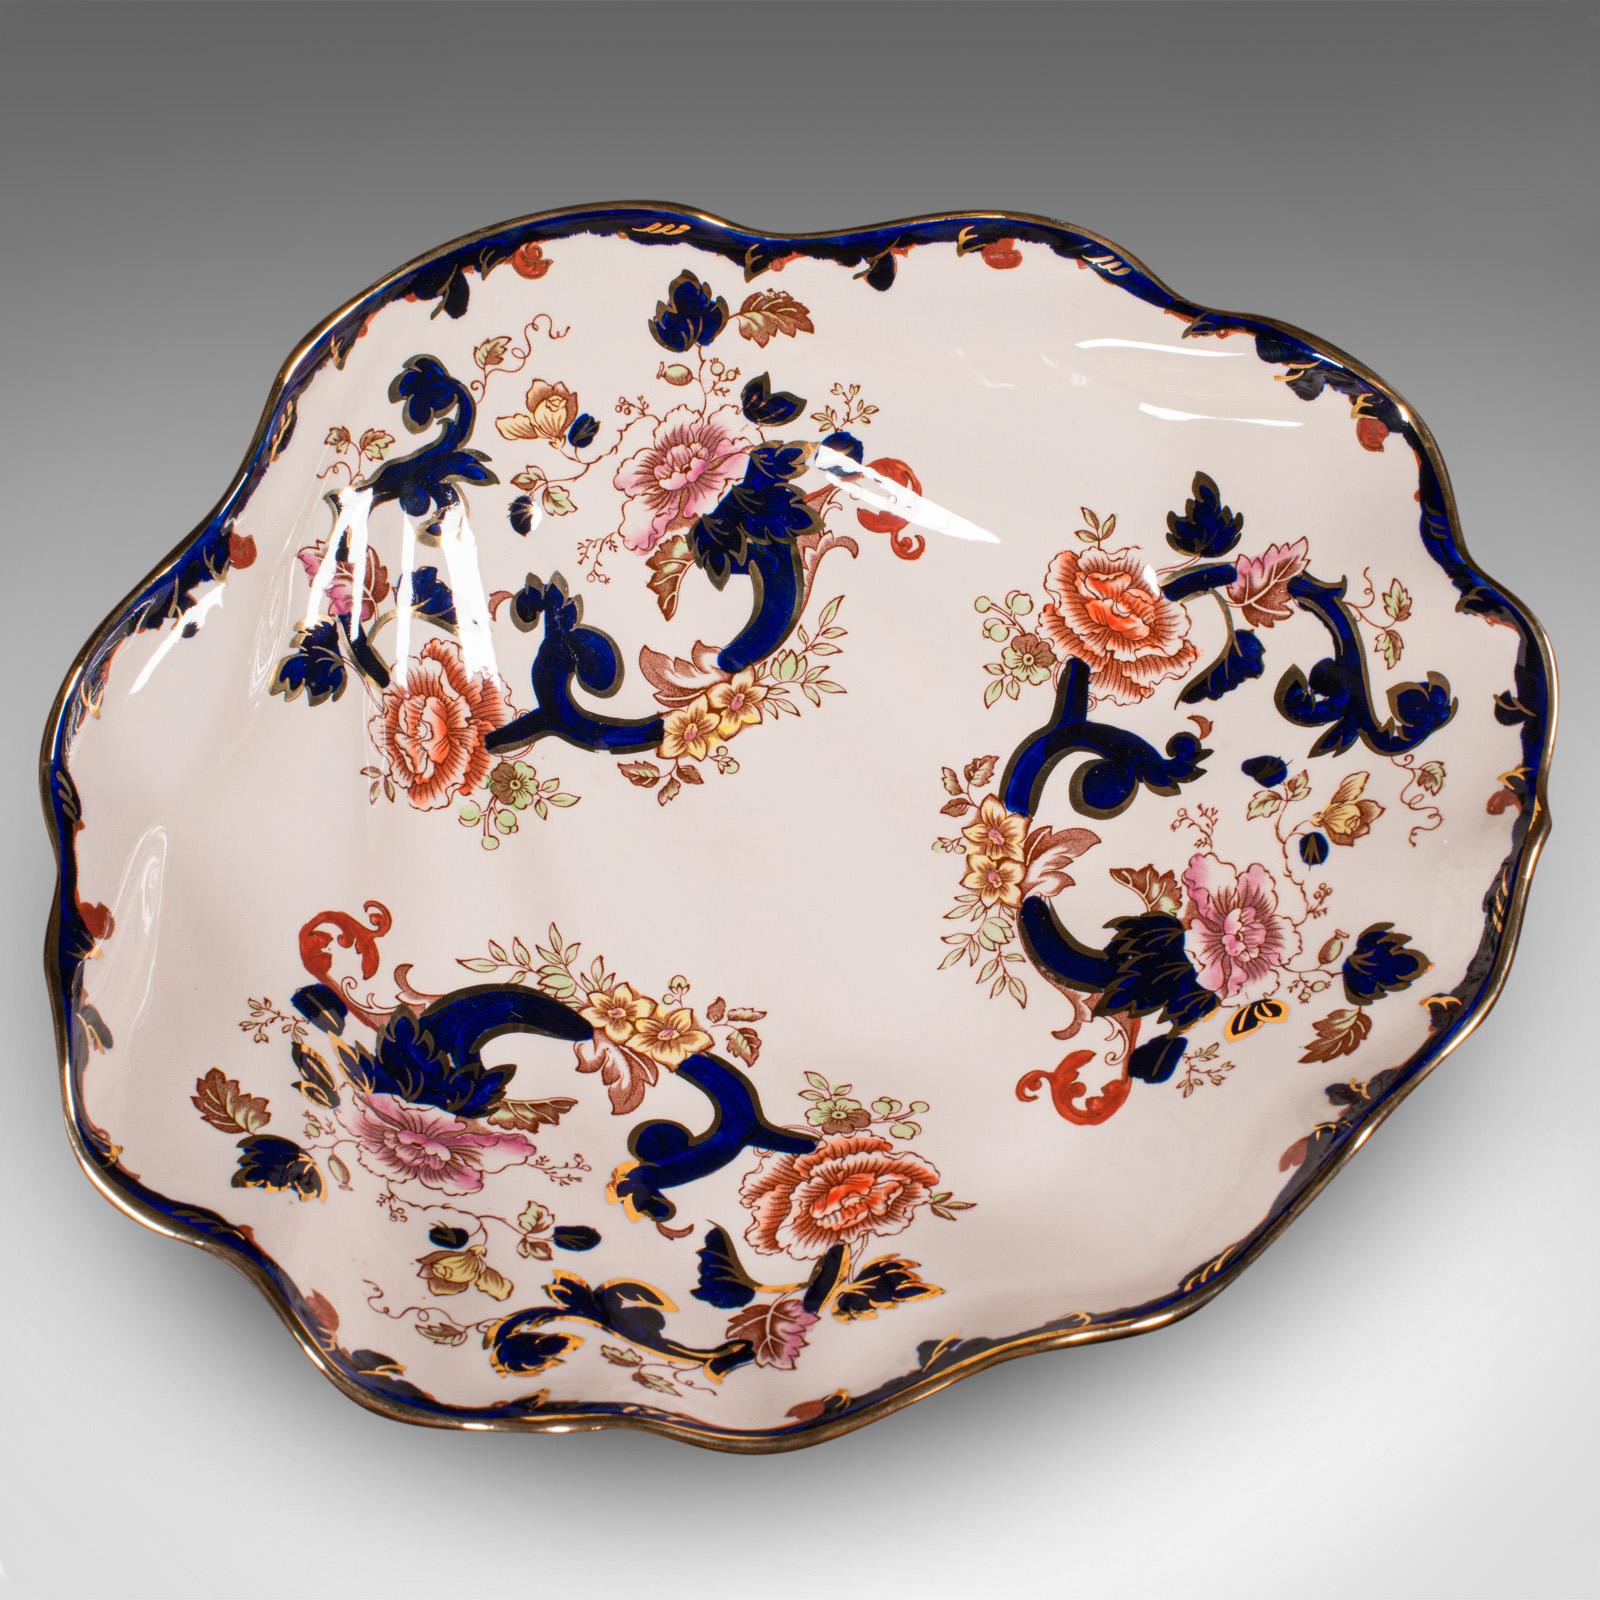 Large Vintage Shell Shaped Fruit Bowl, English Ceramic, Decorative, Serving Dish For Sale 2